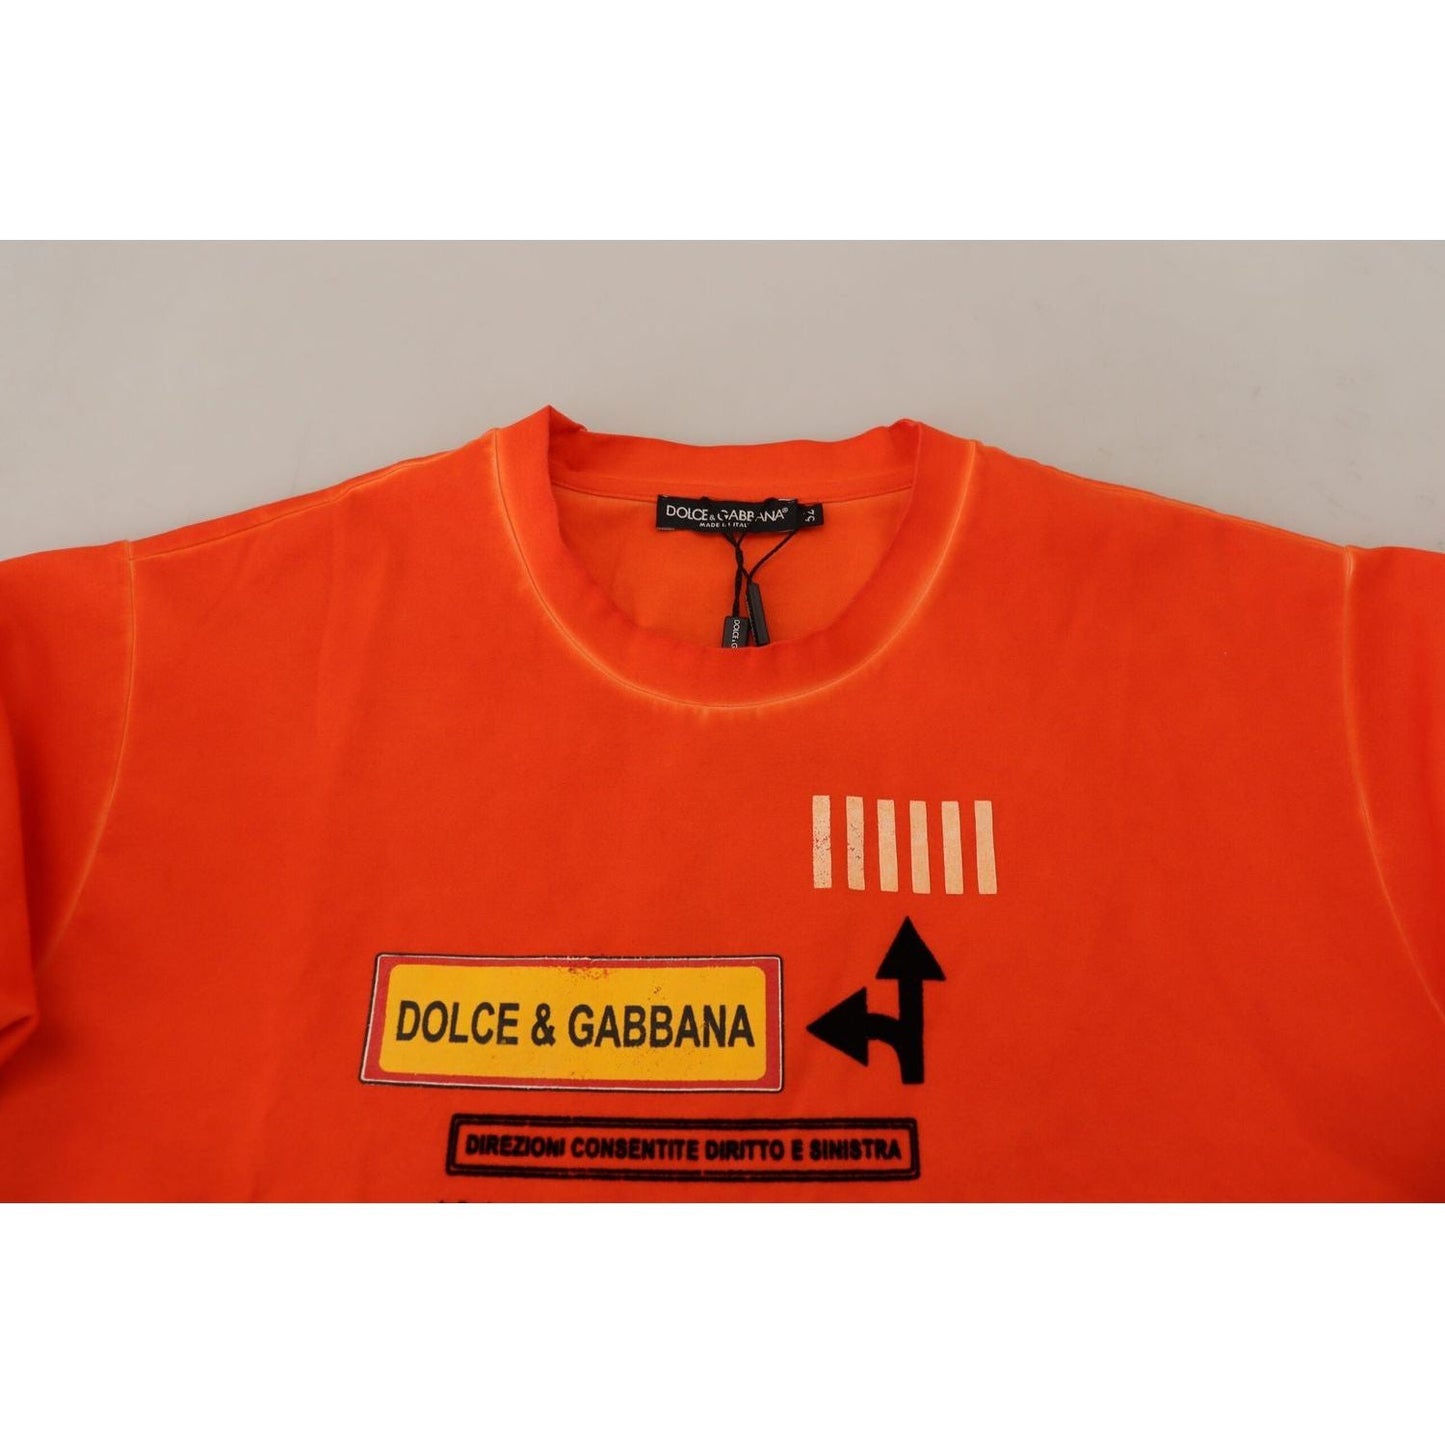 Dolce & Gabbana Elegant Crew Neck Orange Tee orange-cotton-logo-short-sleeve-t-shirt IMG_6479-scaled-92cd46a6-e45.jpg